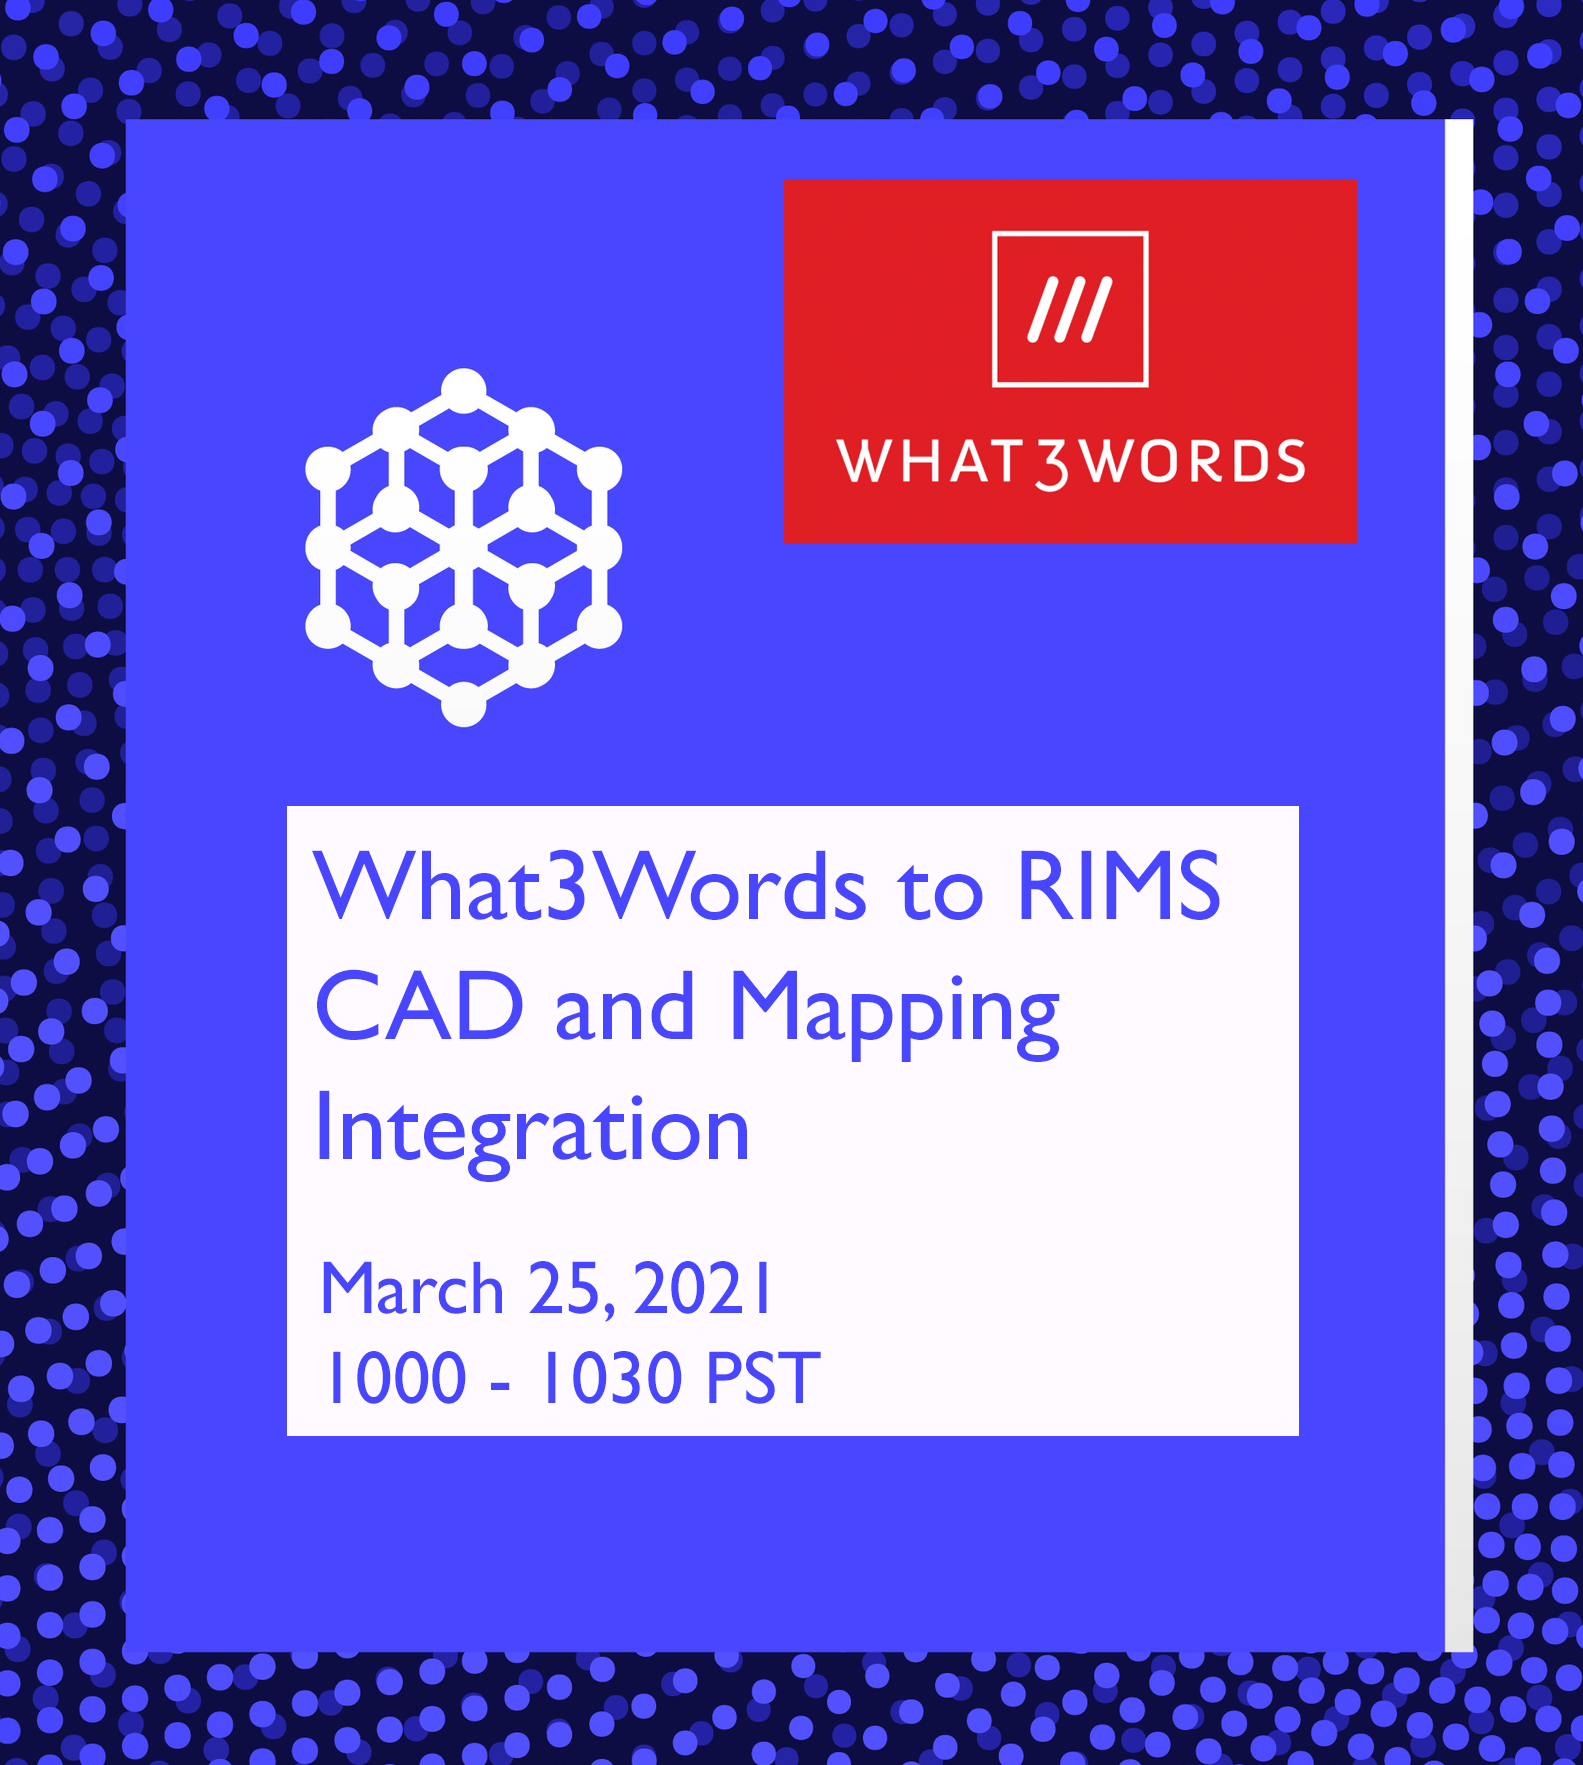 W3W (What3Words) RIMS CAD/Mapping Webinar